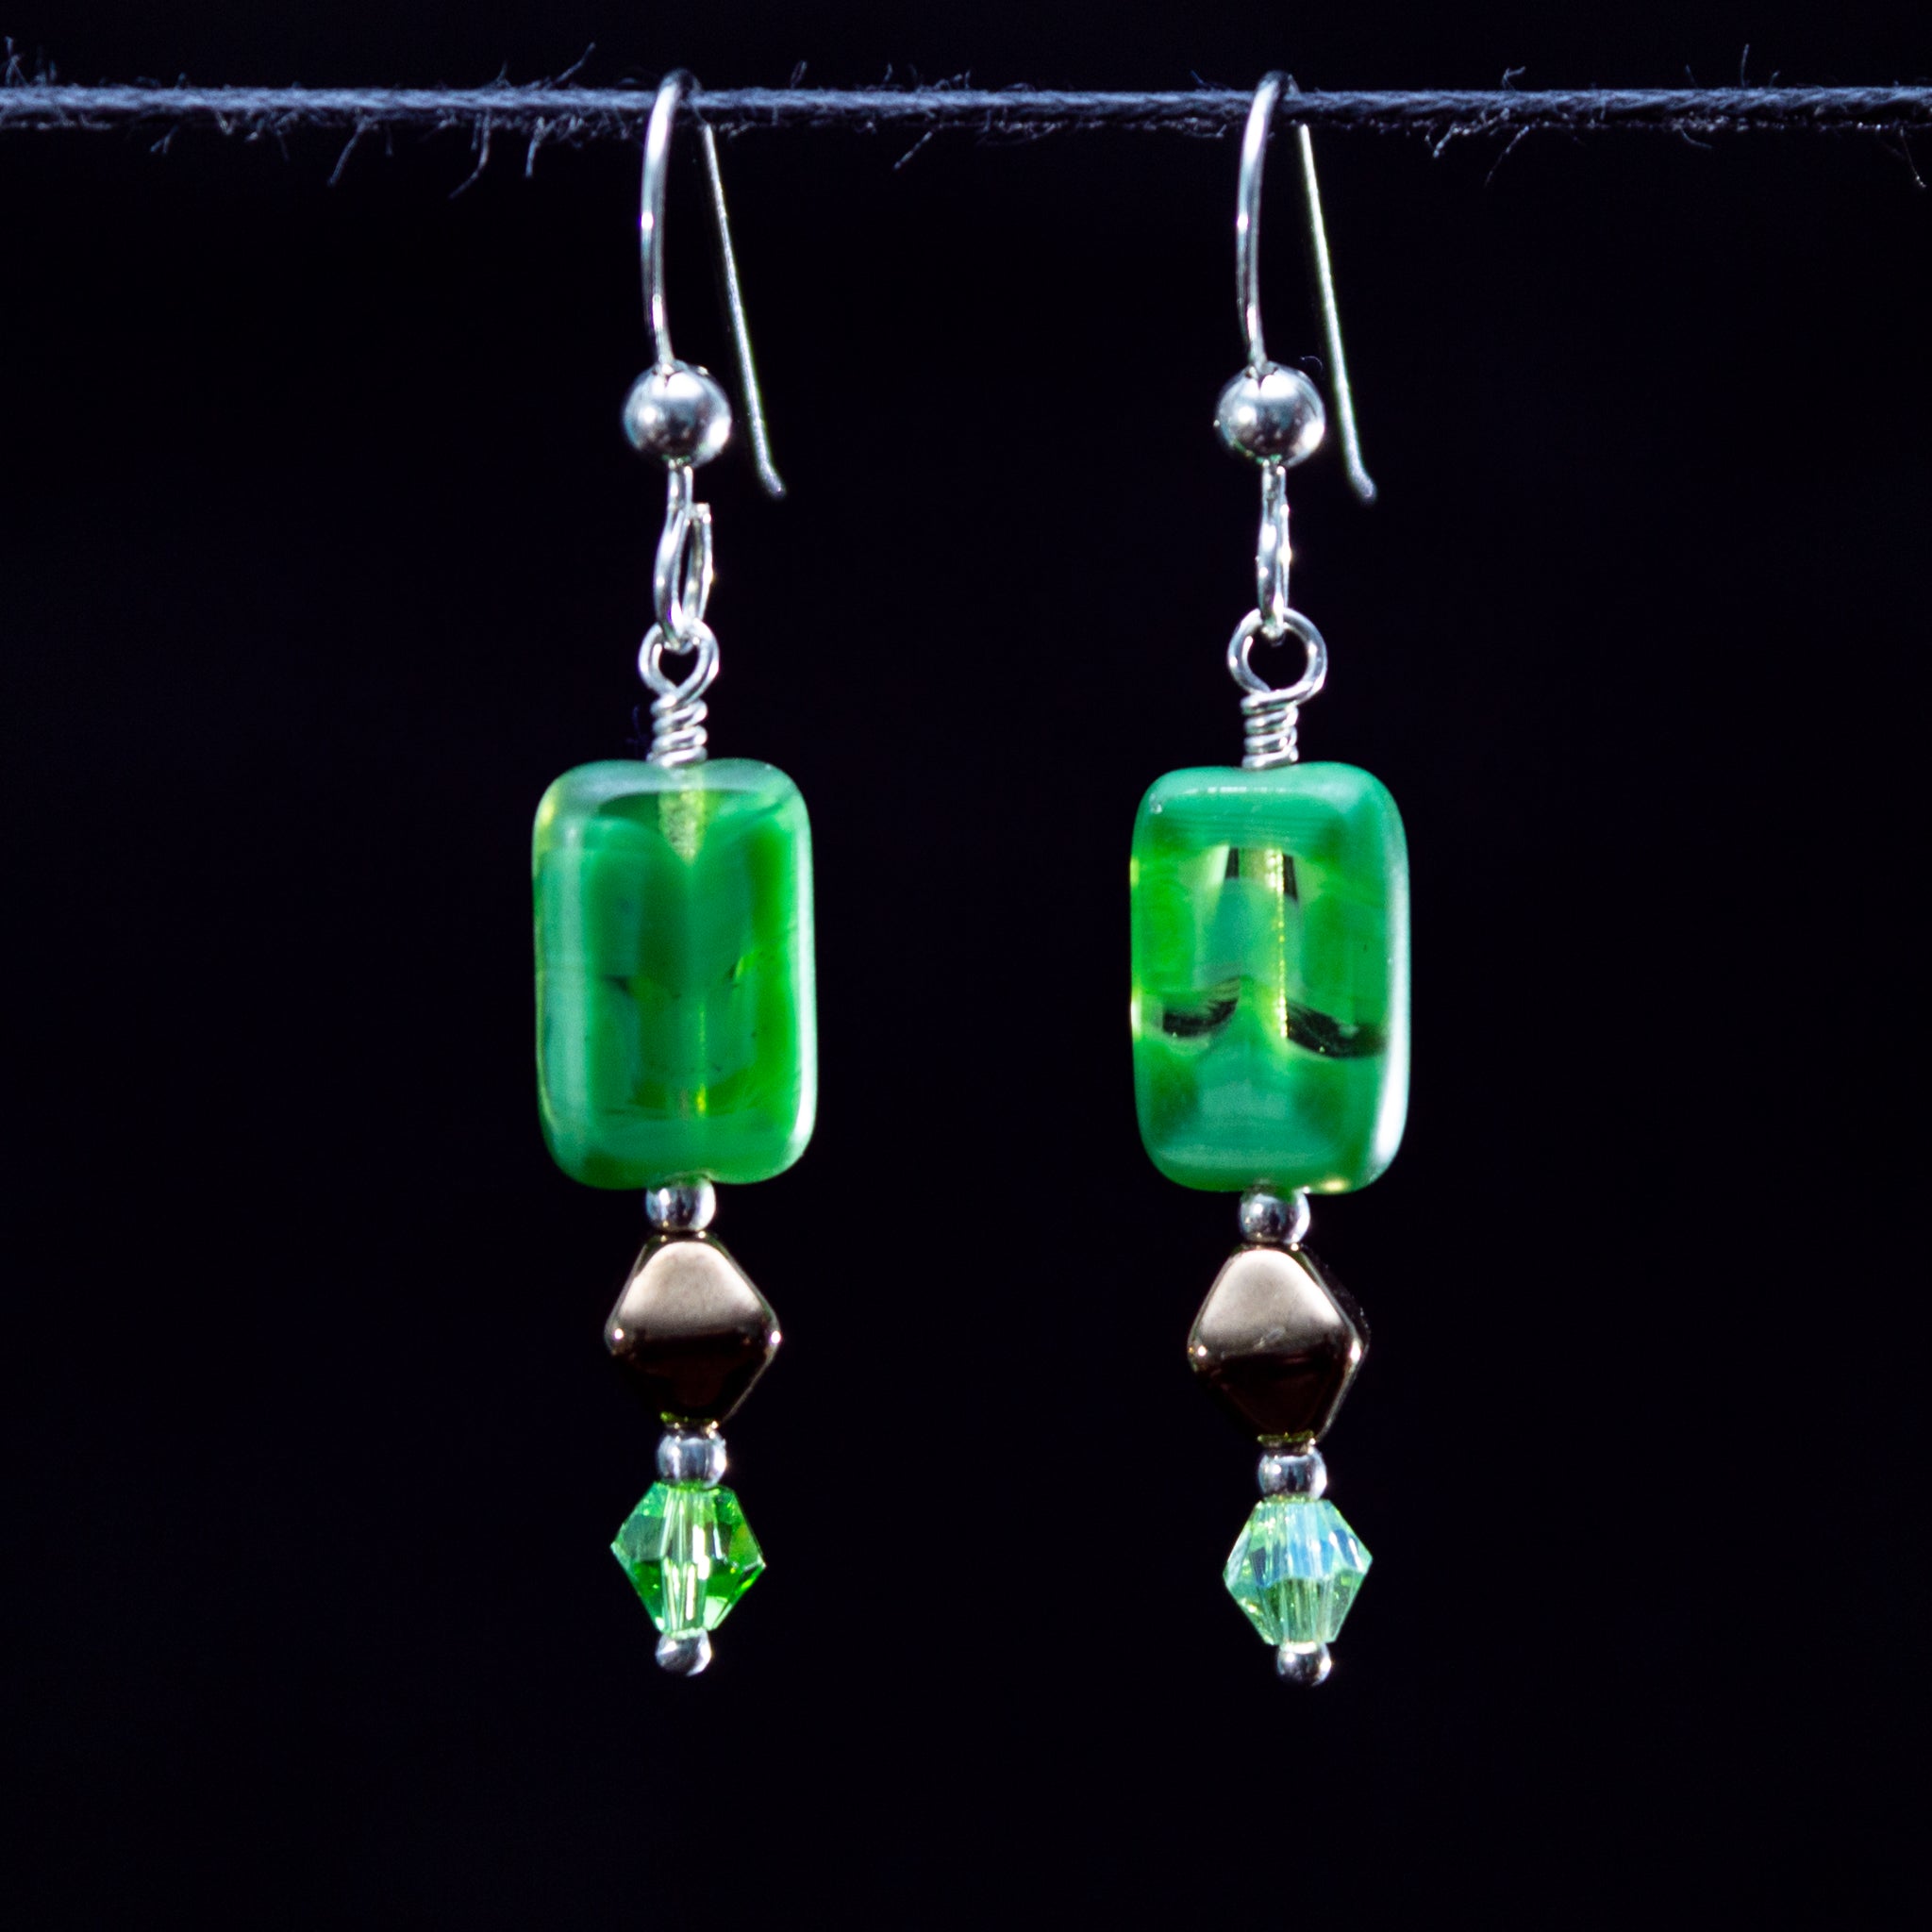 Green glass tablet earrings #2